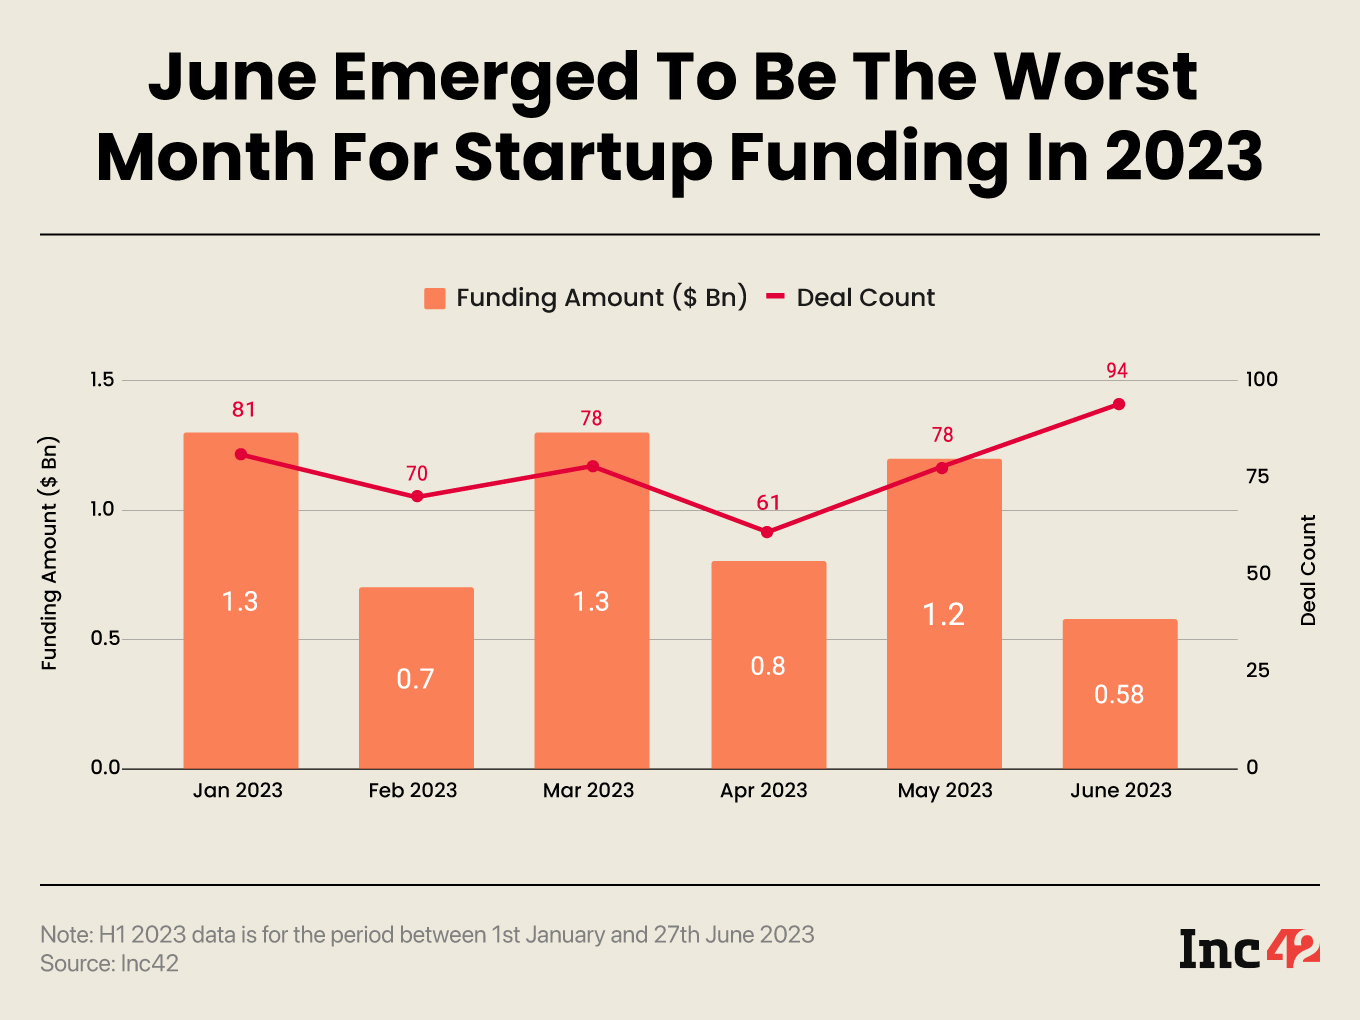 Startup funding in June 2023